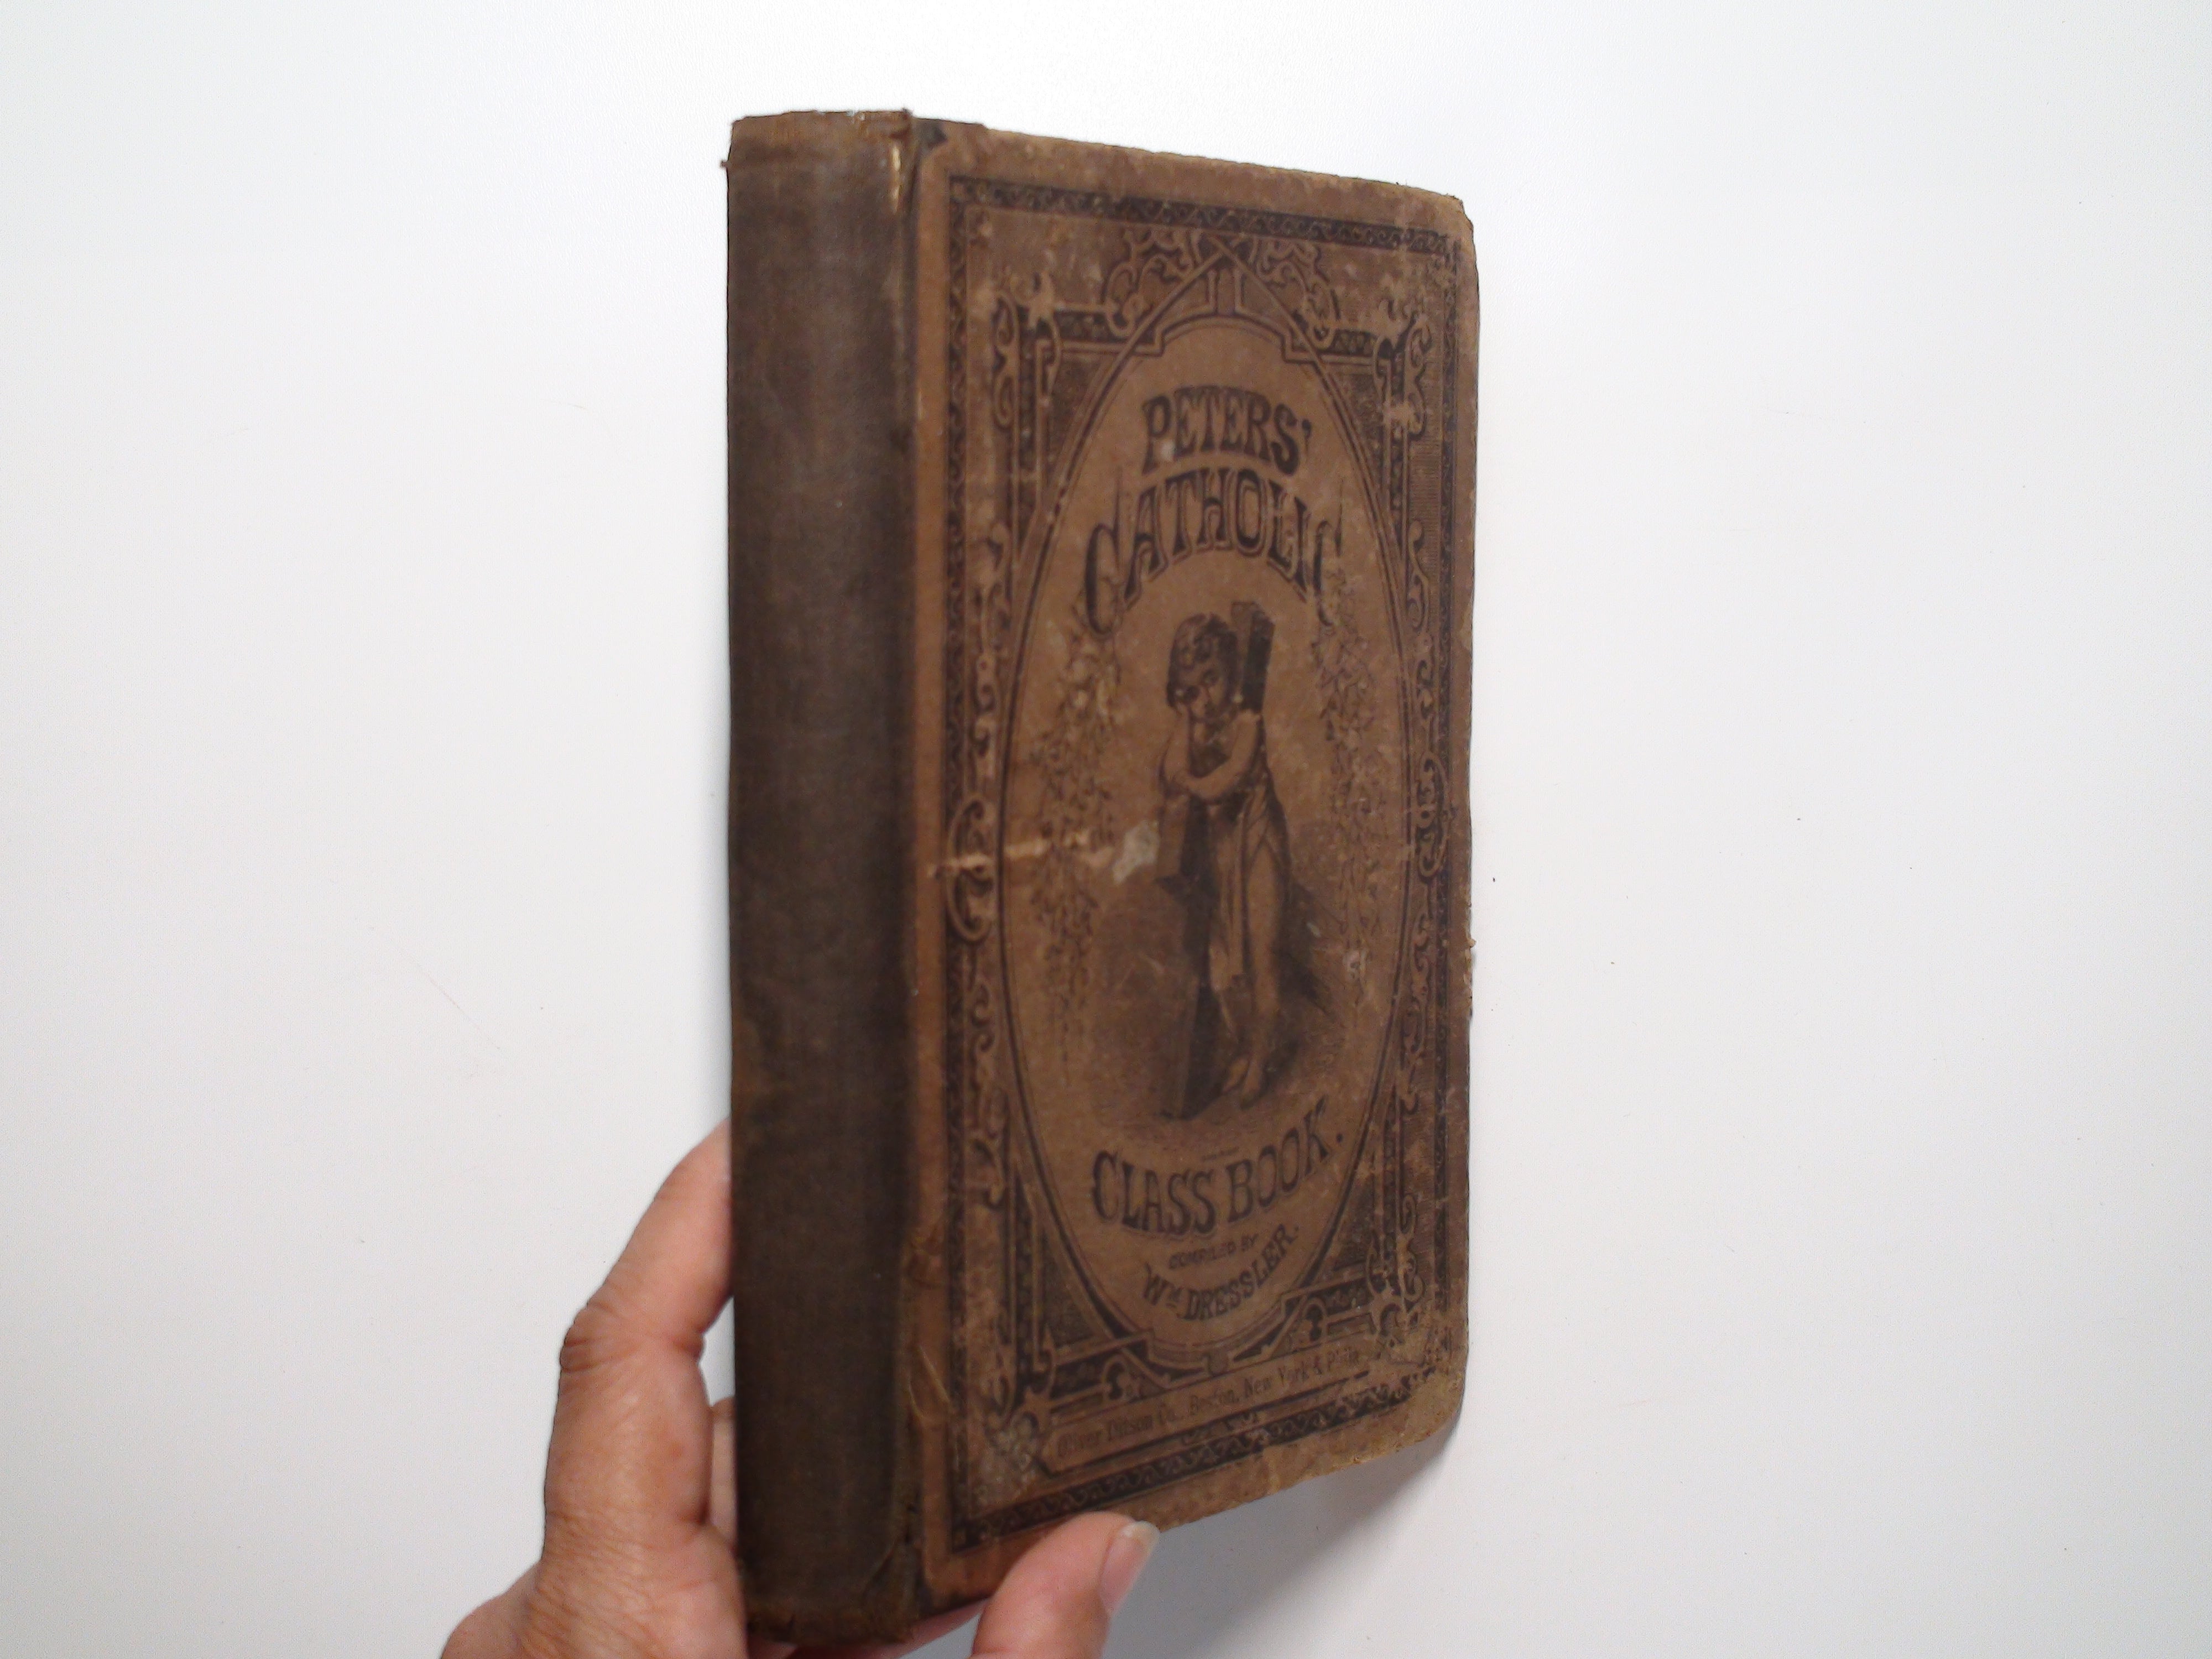 Peters' Catholic Class Book, by William Dressler, 1st Ed, Rare, 1872